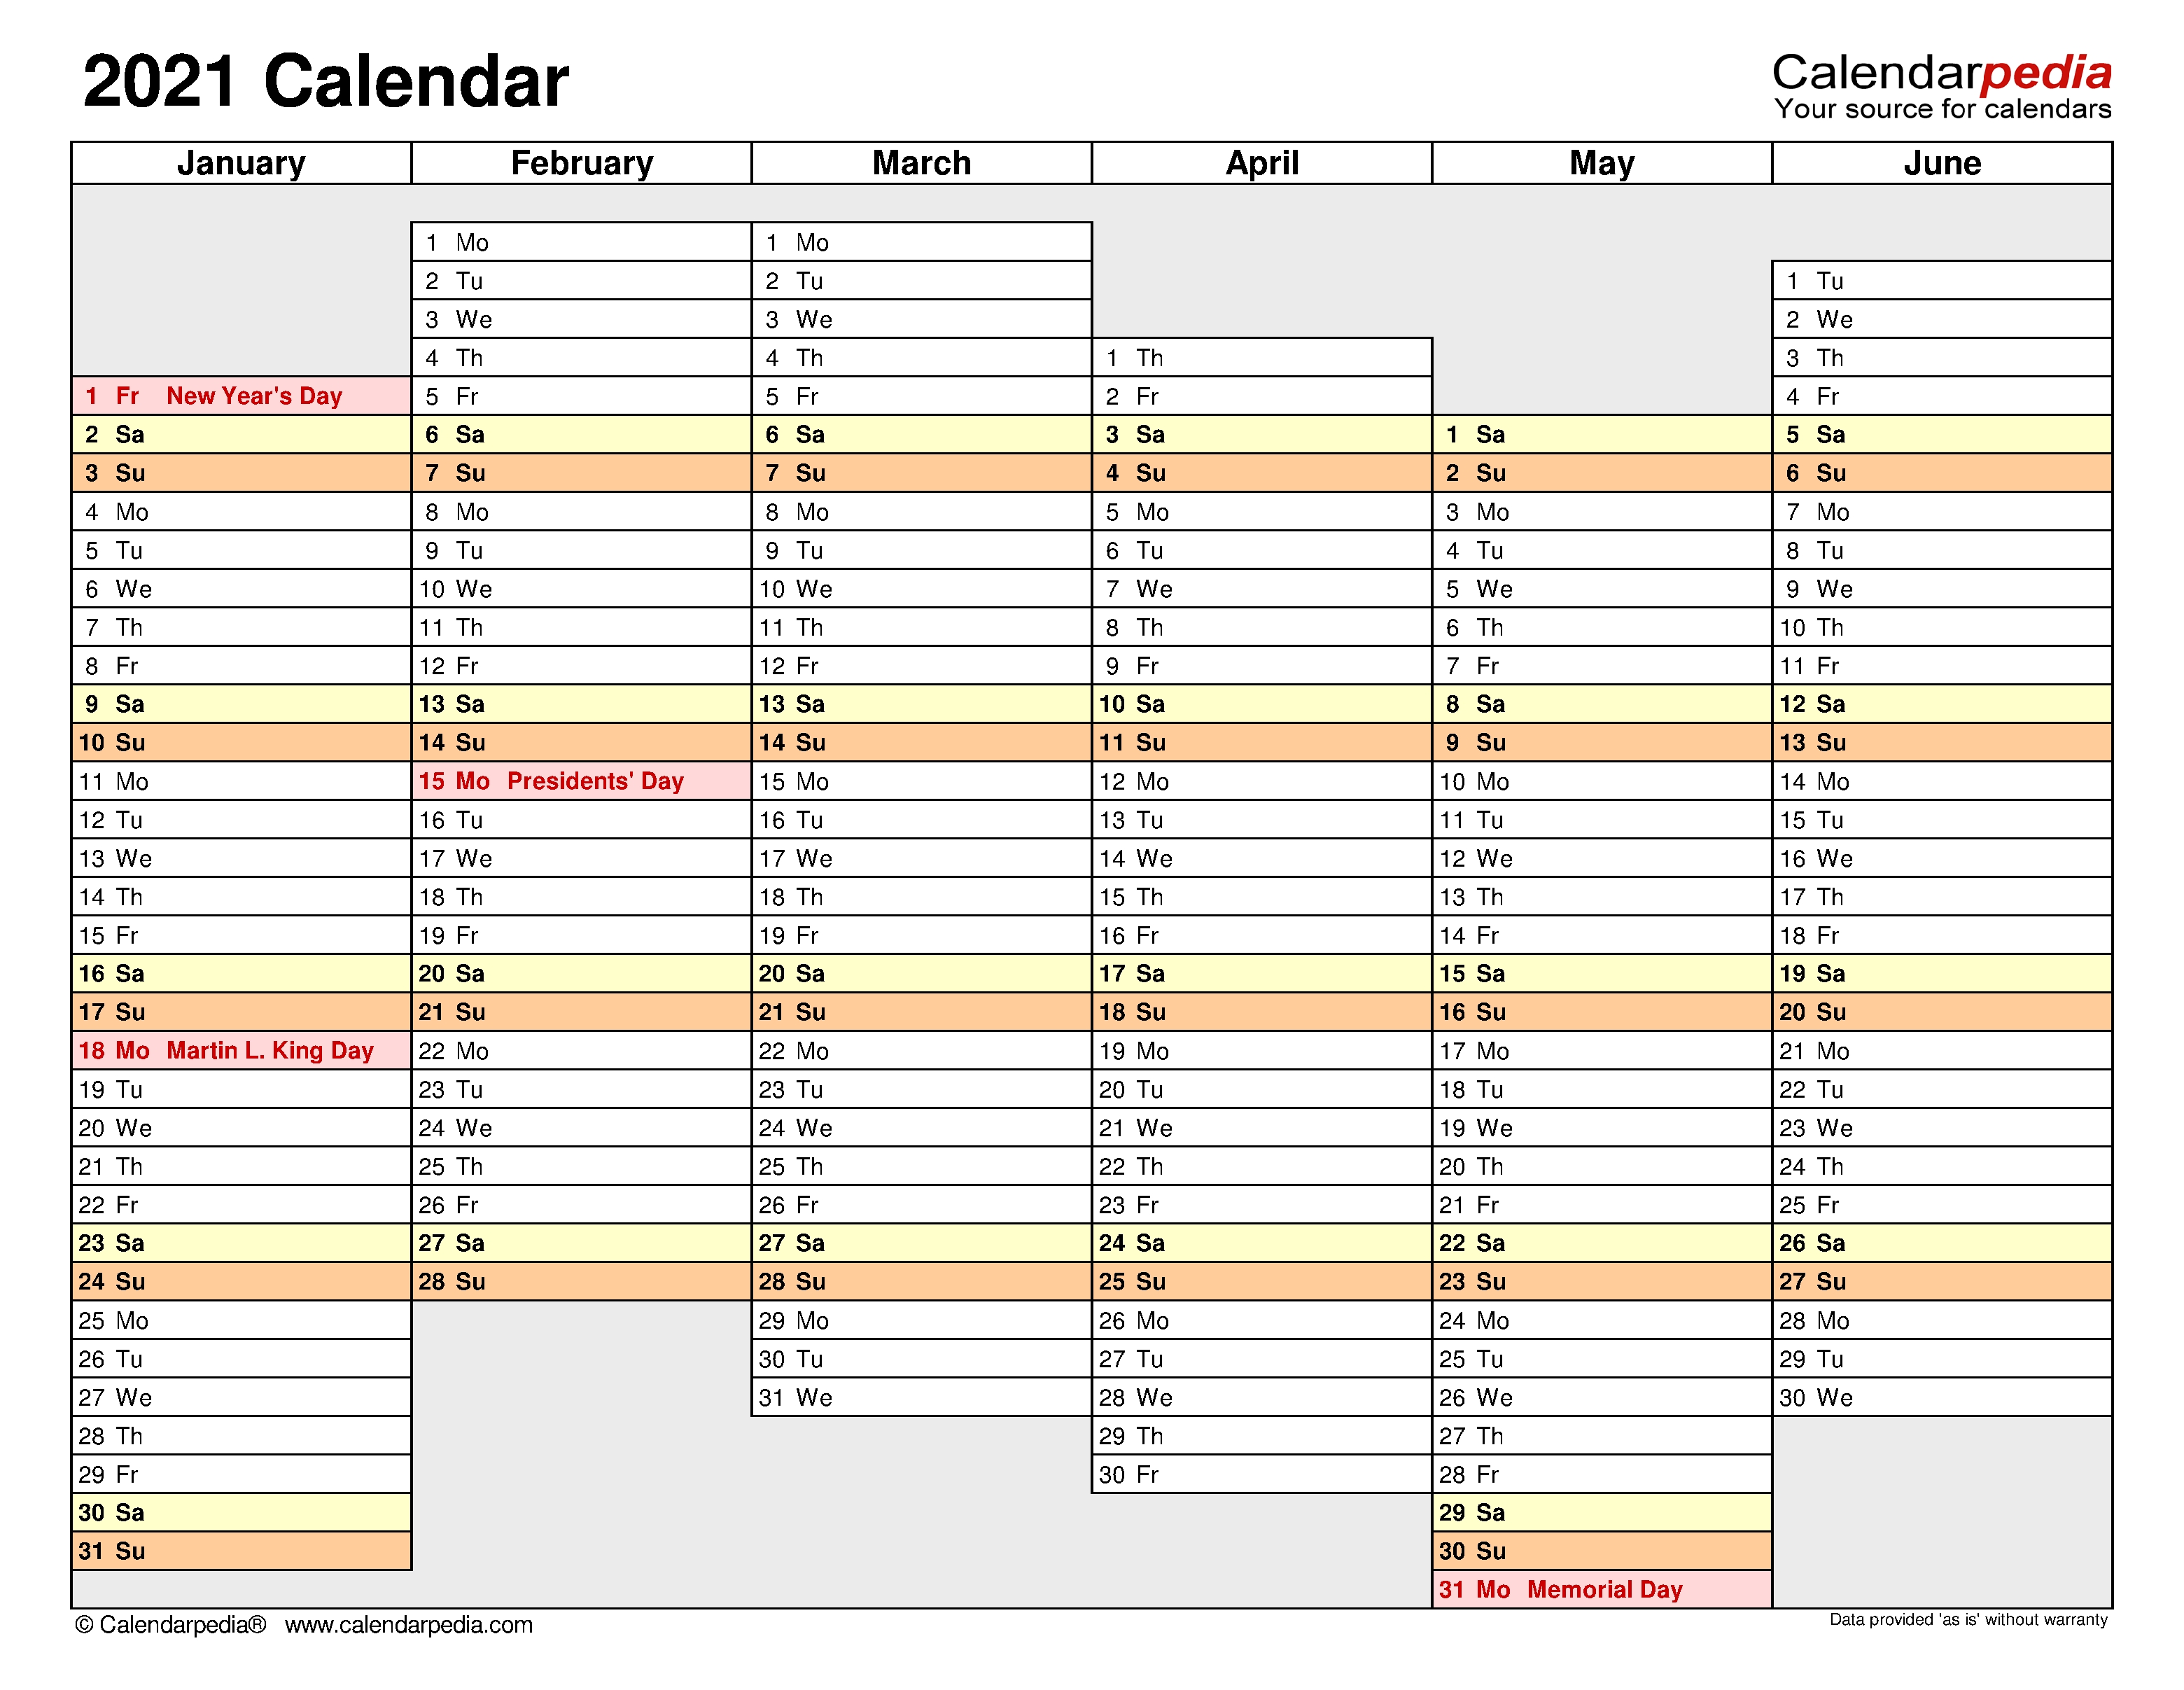 2021 Calendar - Free Printable Excel Templates - Calendarpedia Absence Calendar Excel Template 2021